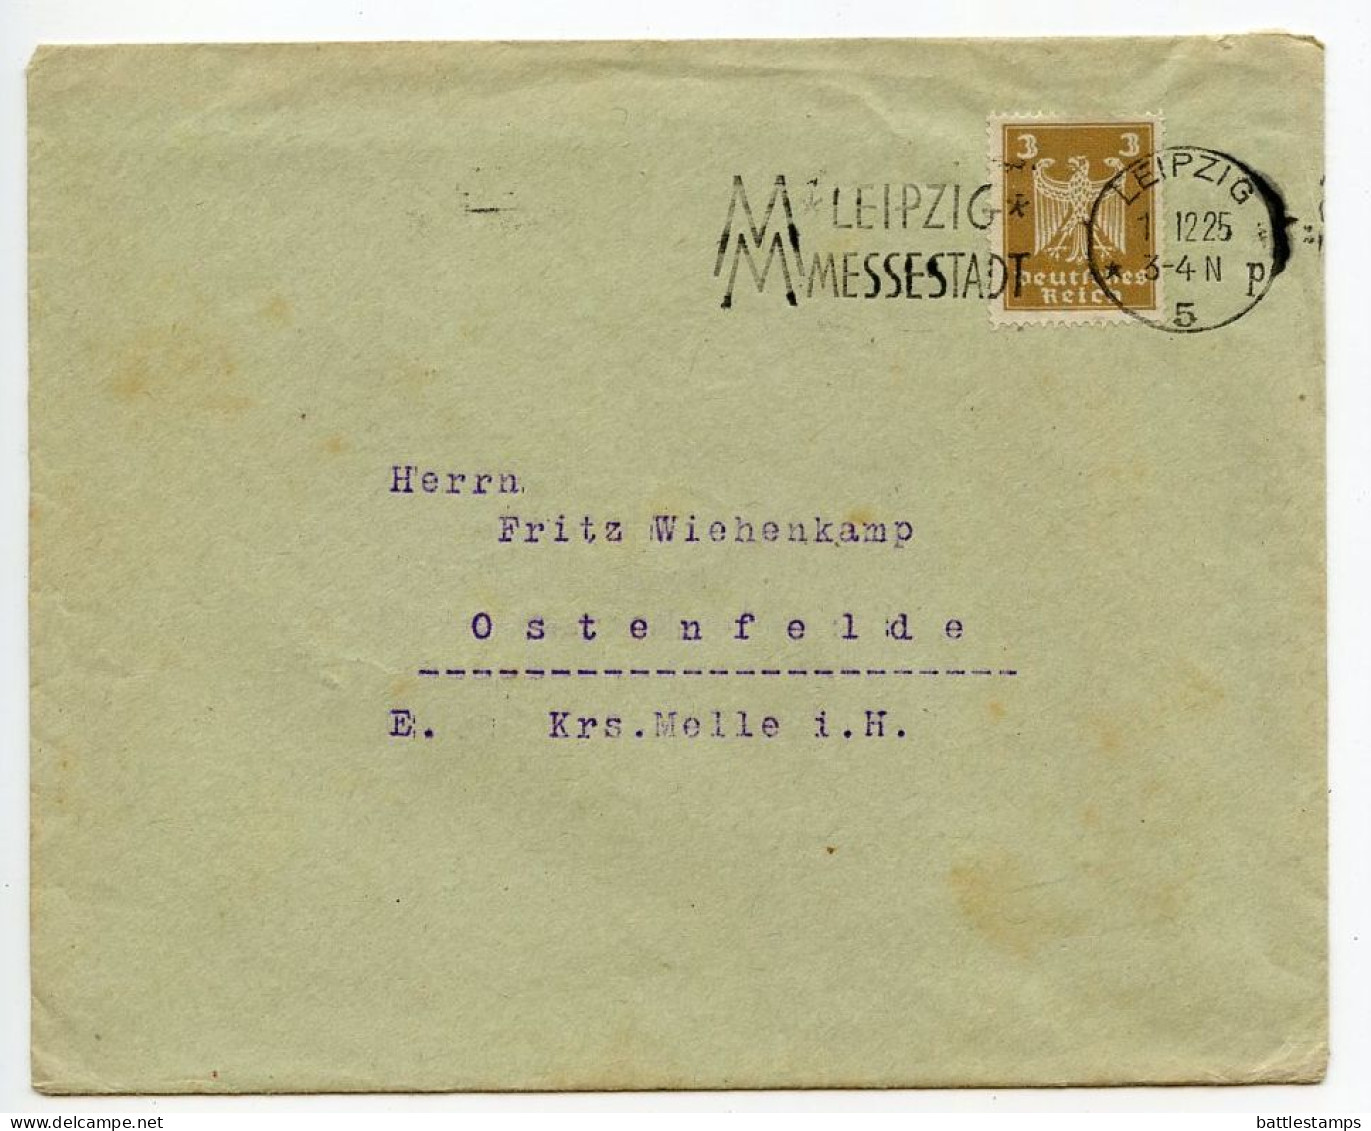 Germany 1925 Cover & Auction Report; Leipzig - Mucrena Rauchwarenversteigerungs; 3pf. German Eagle; Slogan Cancel - Covers & Documents